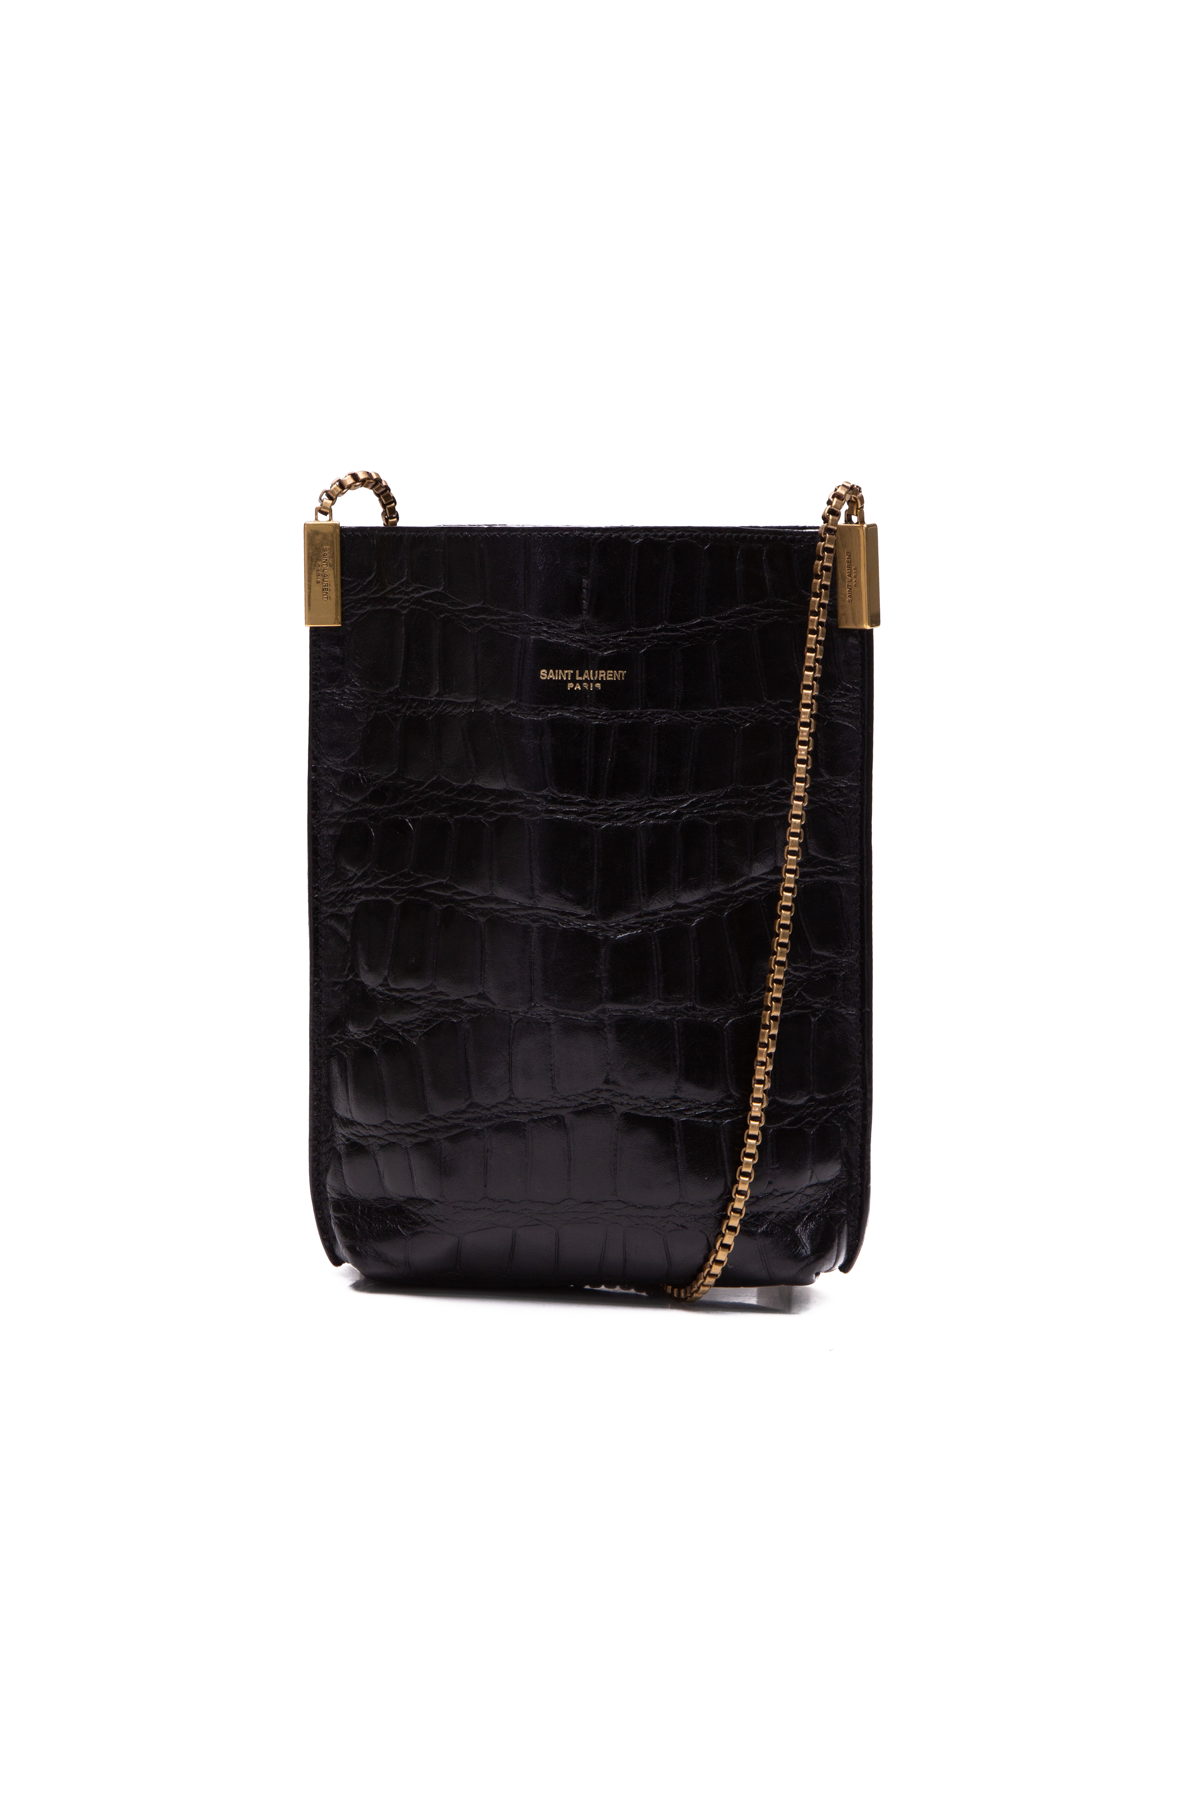 Saint Laurent - Suzanne Black Leather Small Hobo Bag